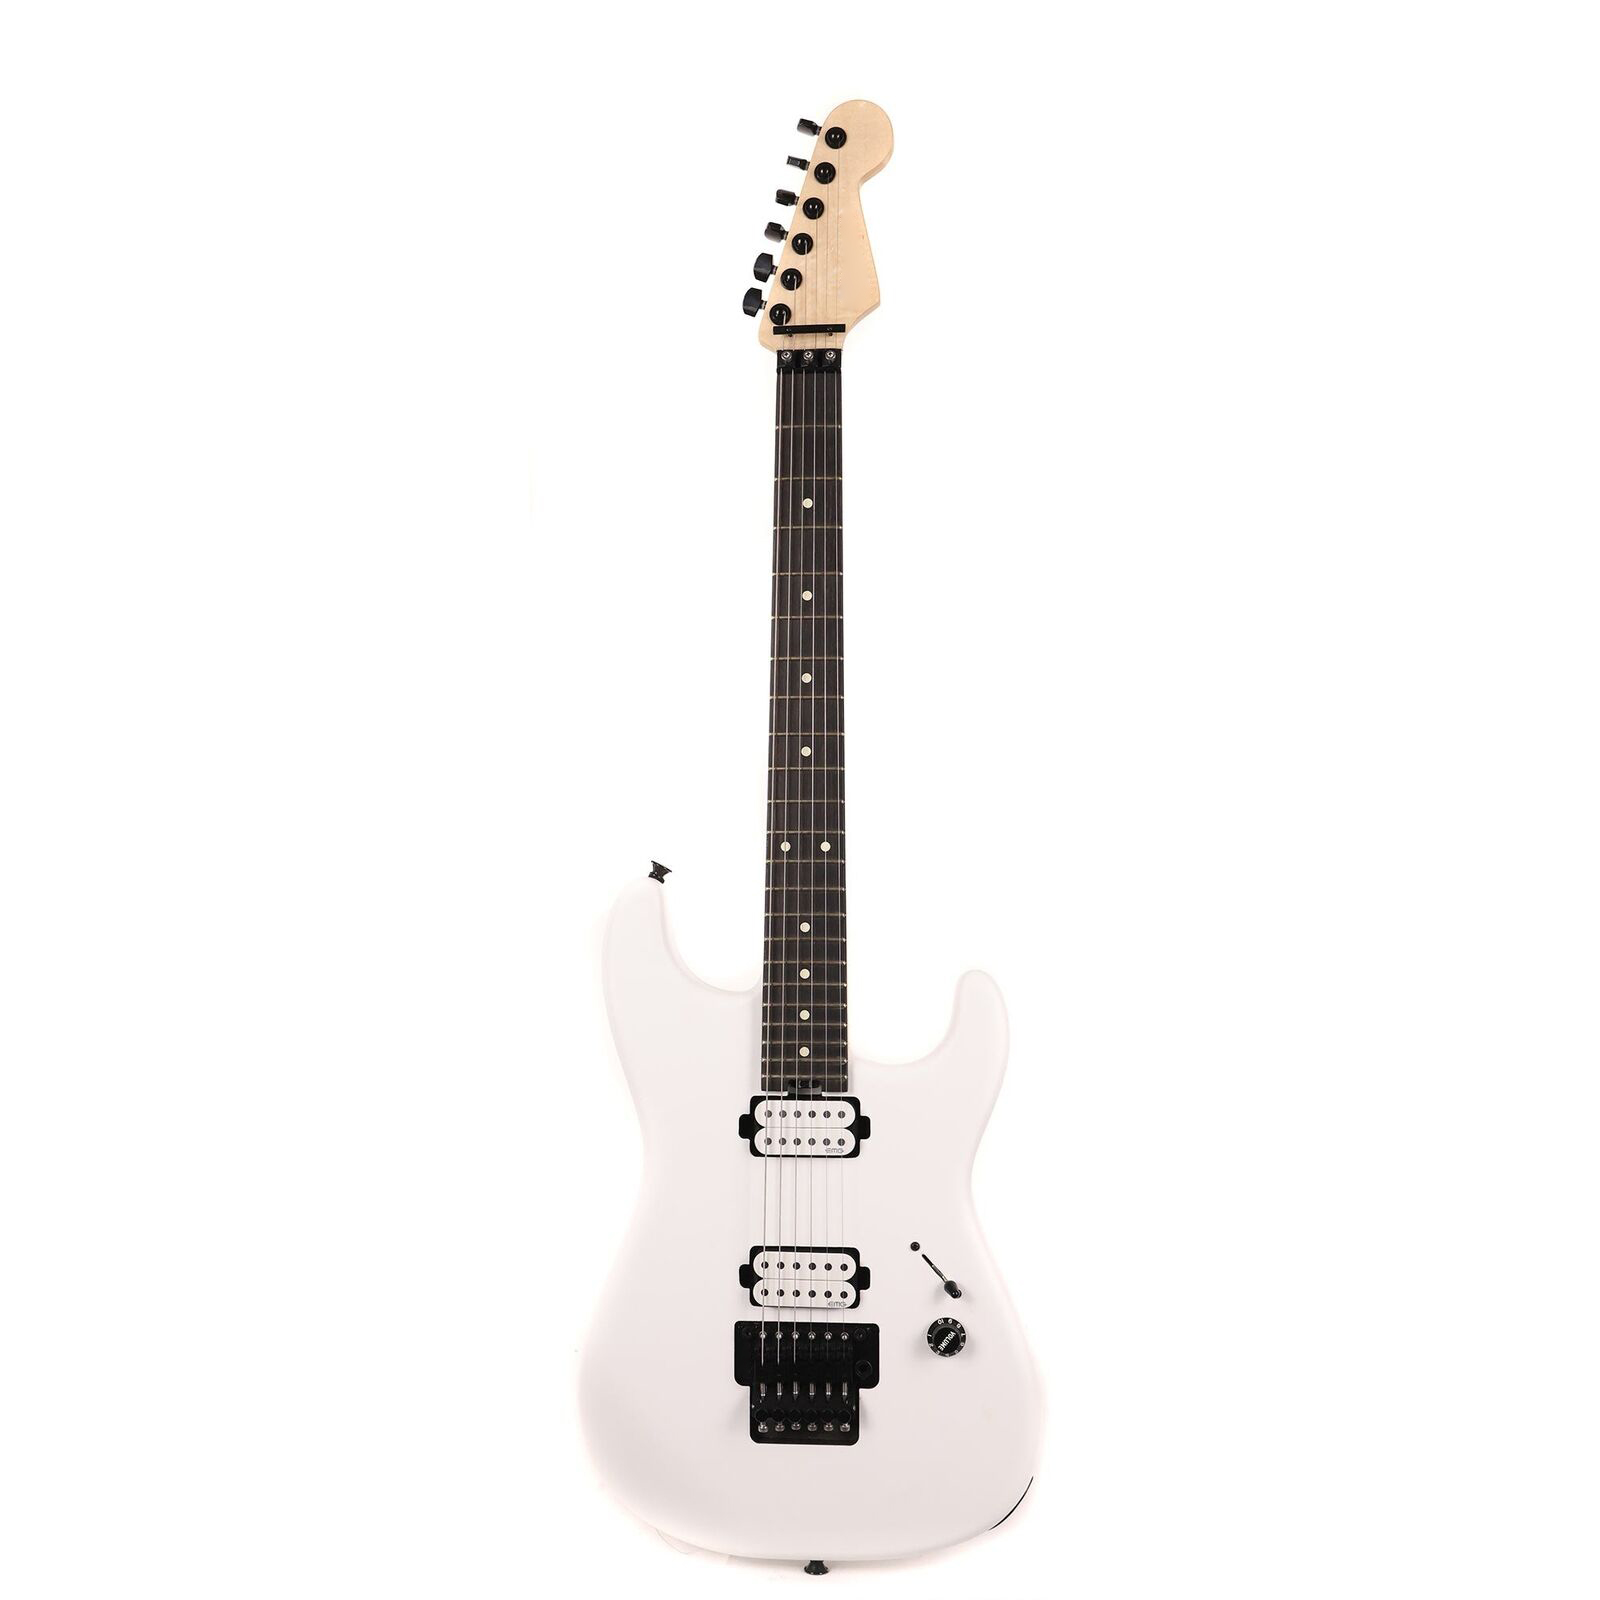 Charv El Jim Raiz Signature Pro-Mod San Dimas Style 1 HH Fr M Satin White Electric Guitar da mesma forma